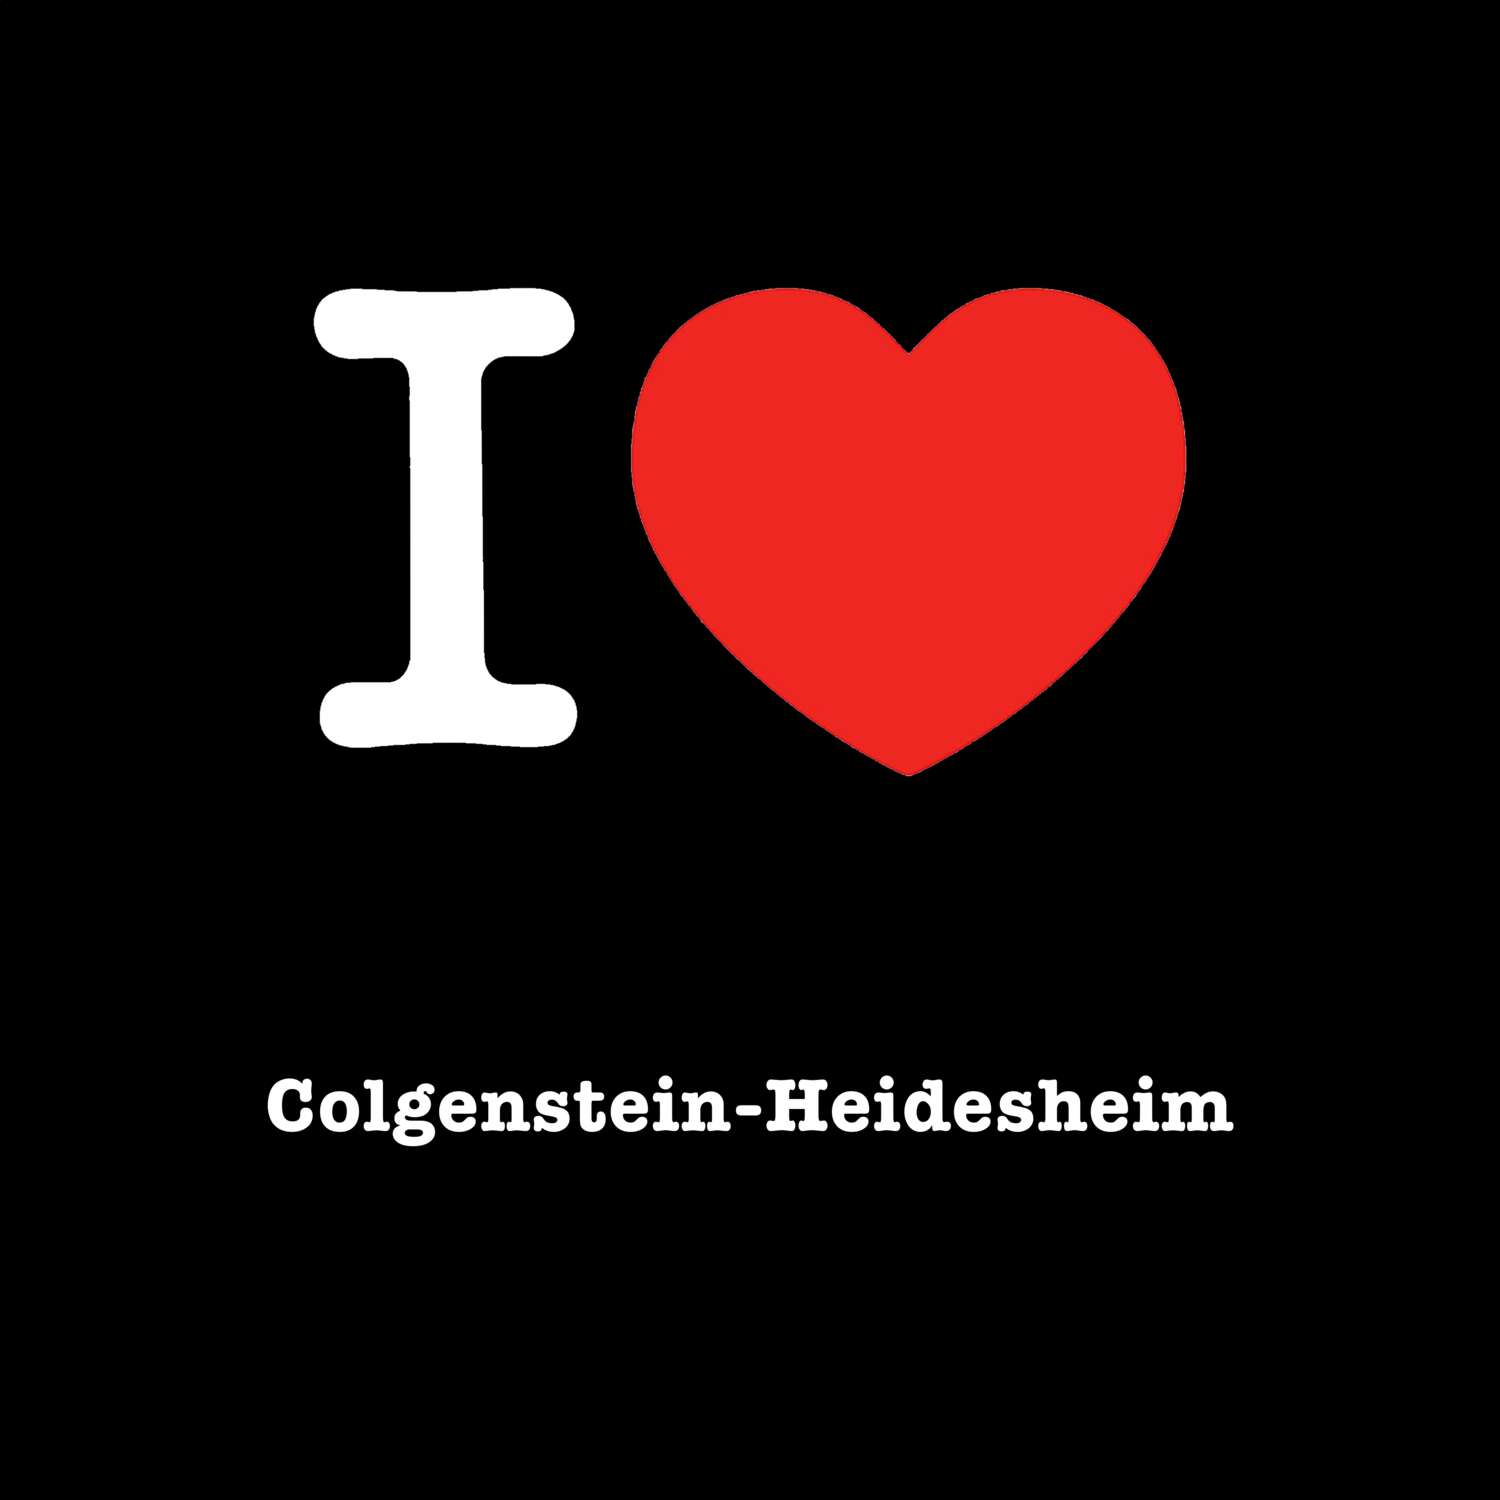 Colgenstein-Heidesheim T-Shirt »I love«